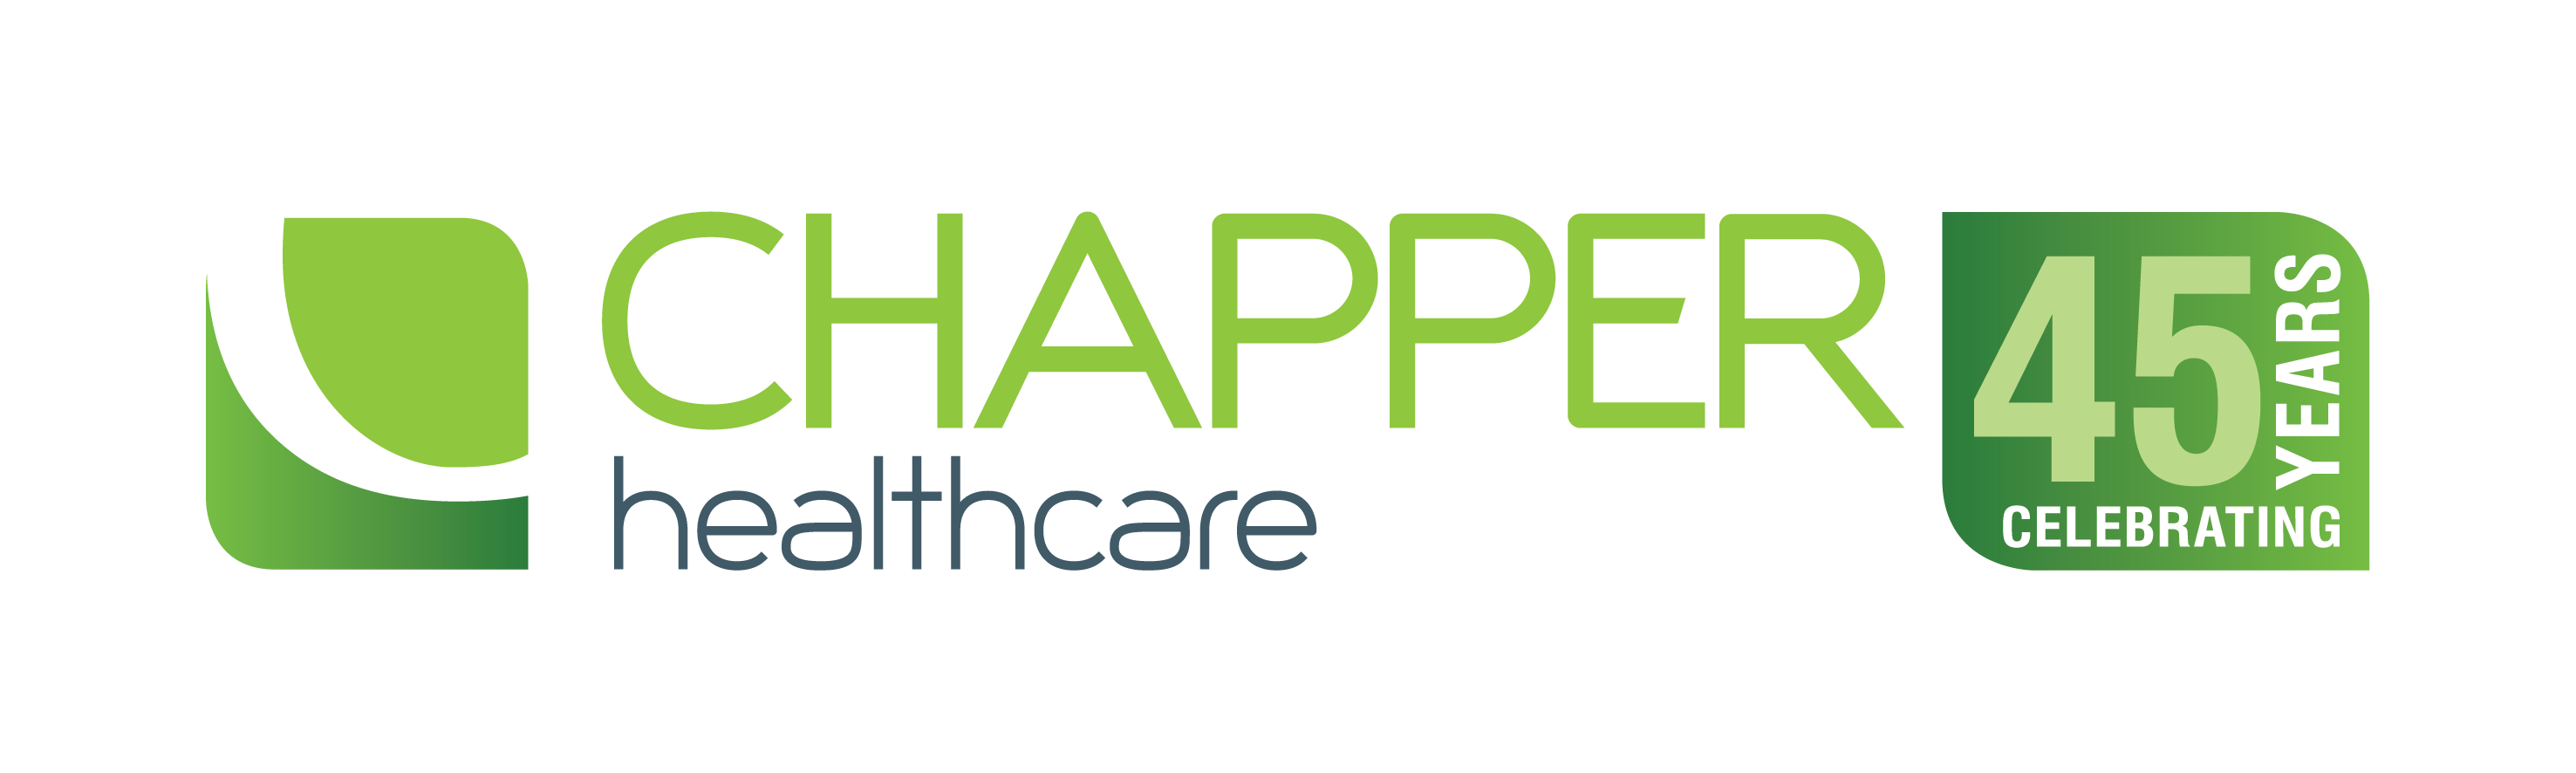 Chapper Healthcare